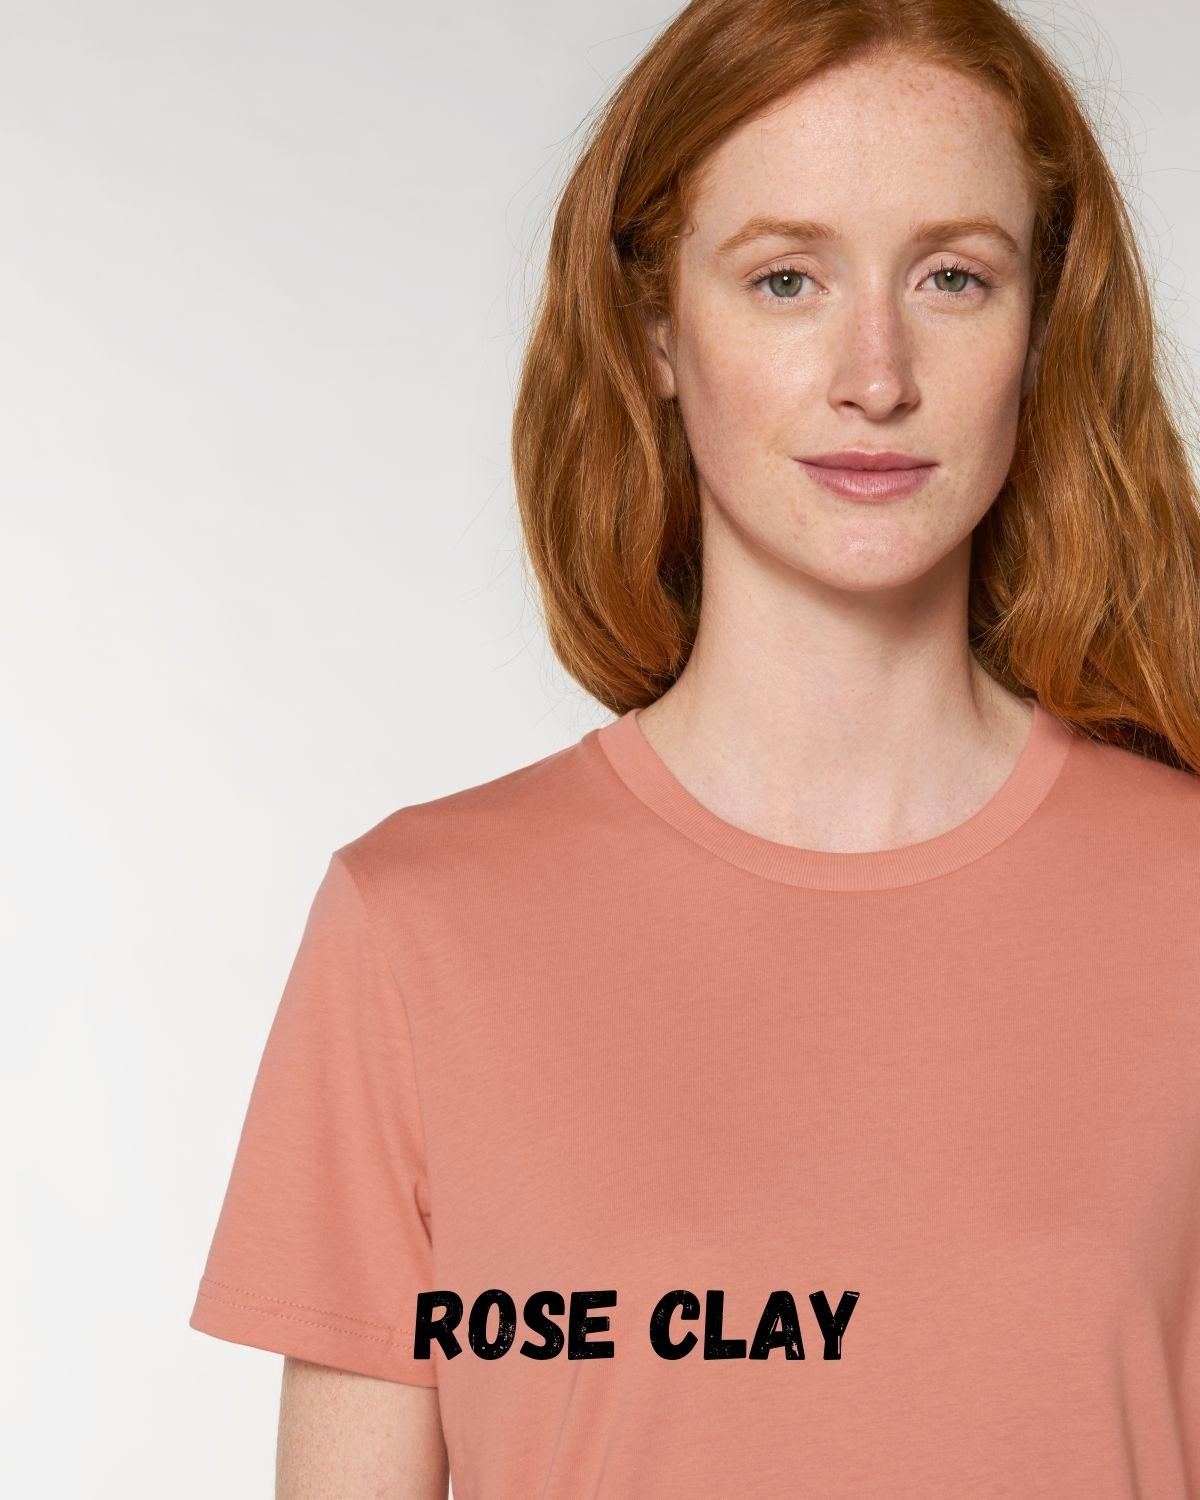 Rose clay